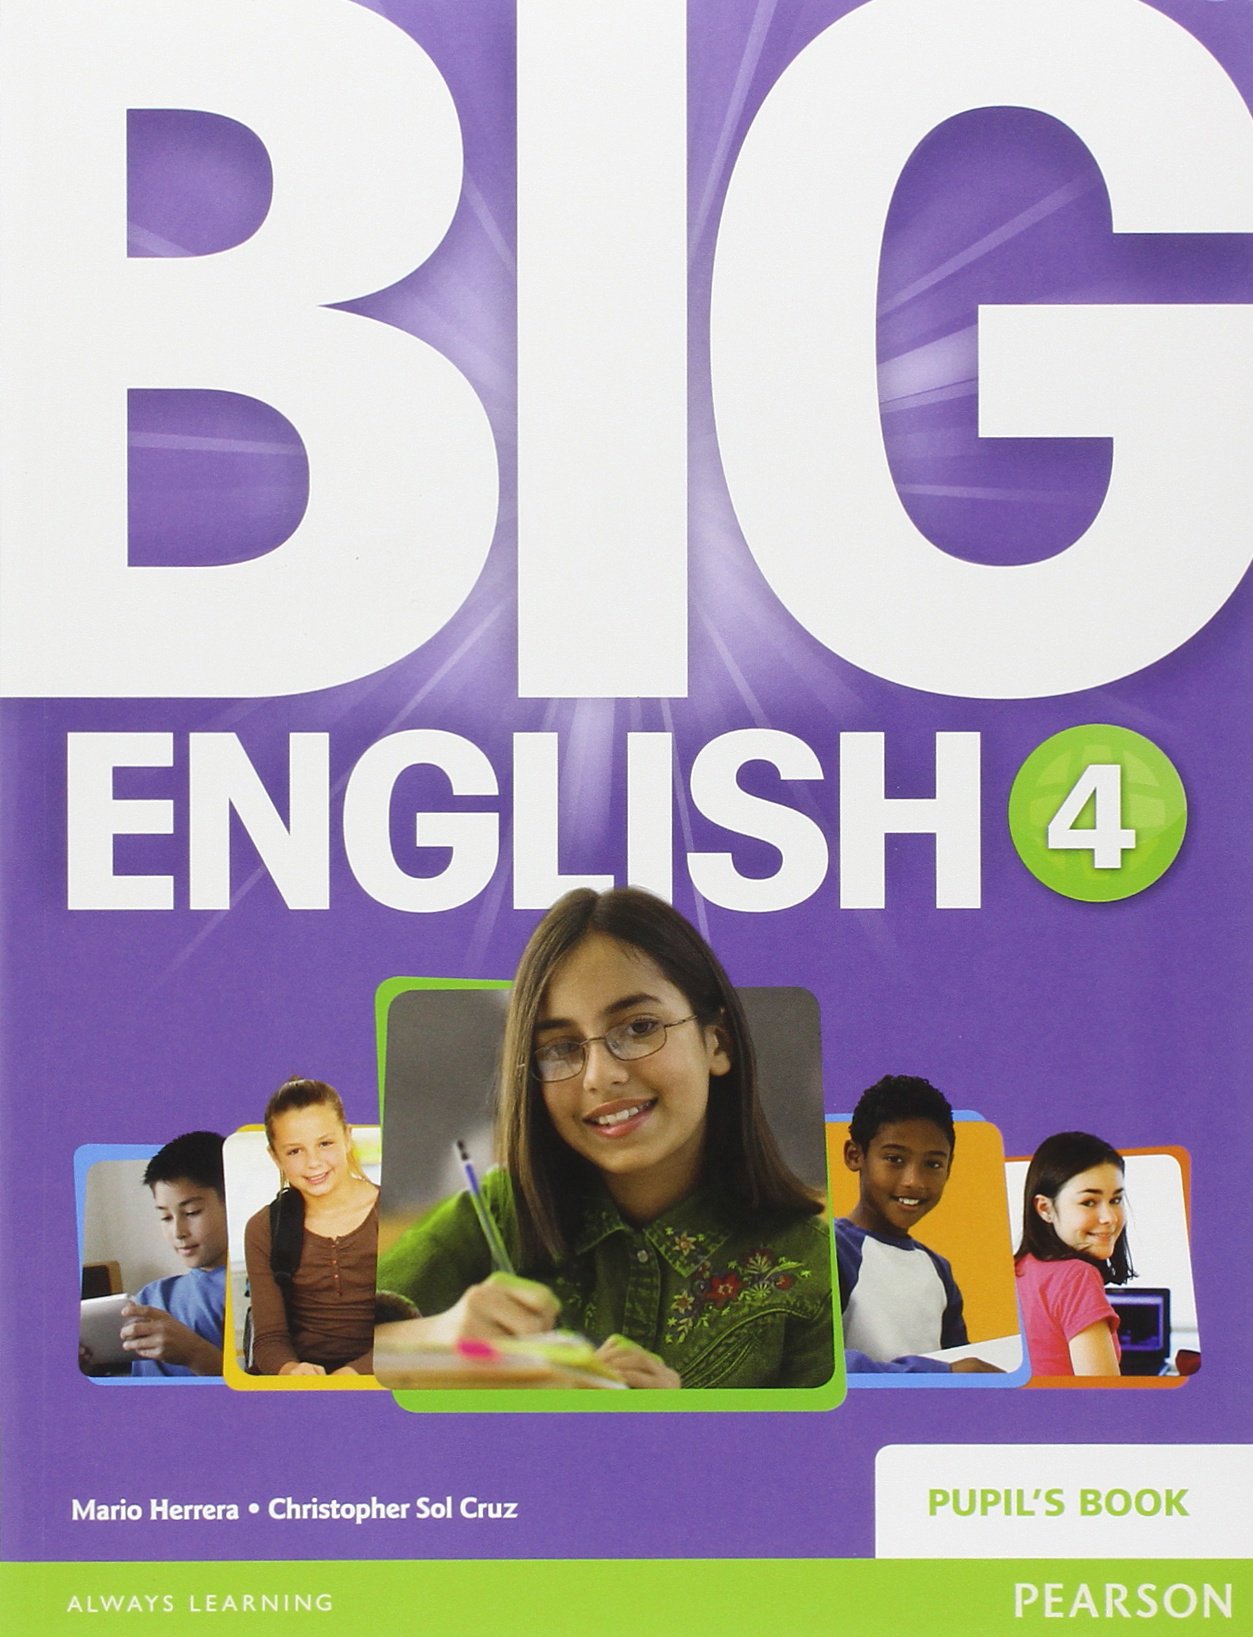 BIG ENGLISH 4 Pupil's Book